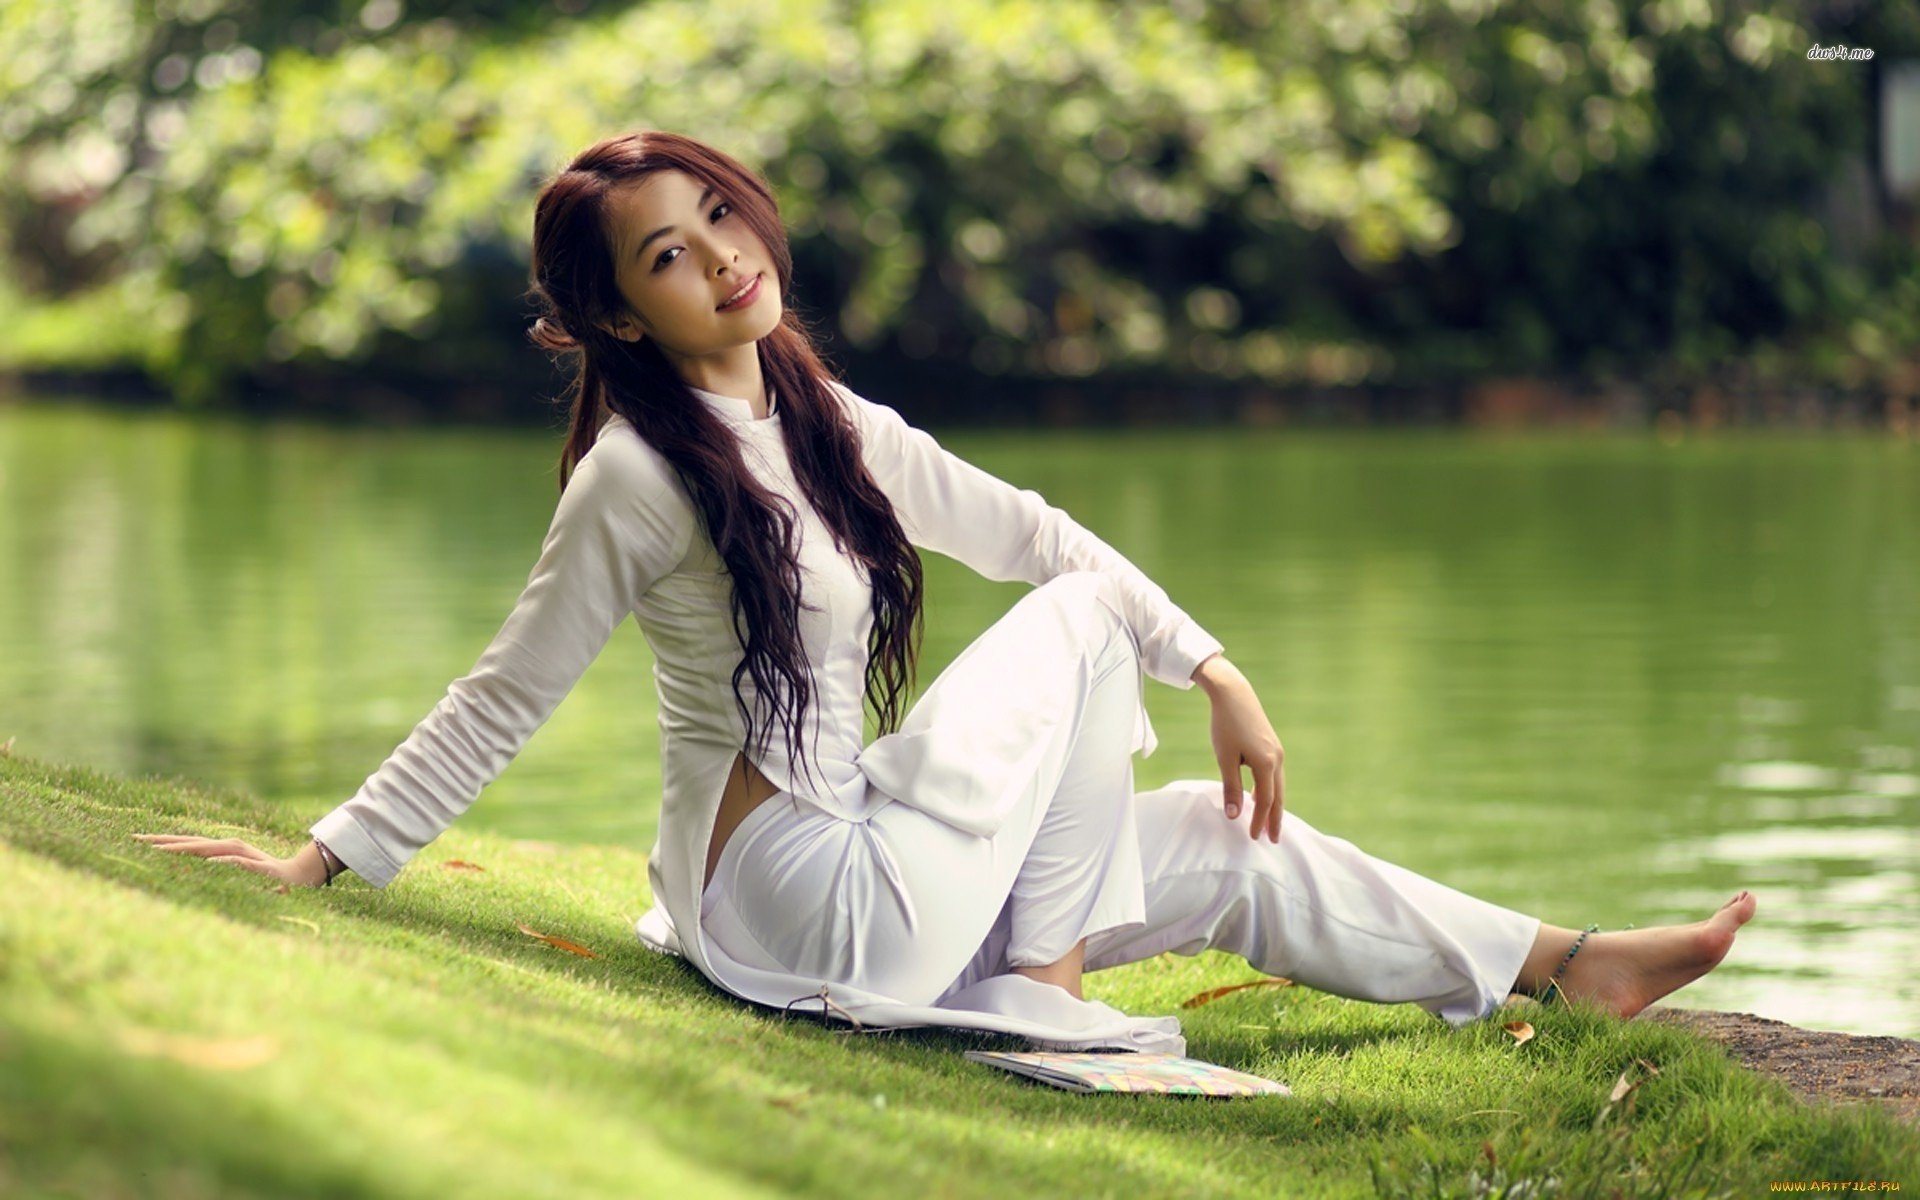 Women Model Brunette Long Hair Women Outdoors Asian Grass Water Trees Park Smiling